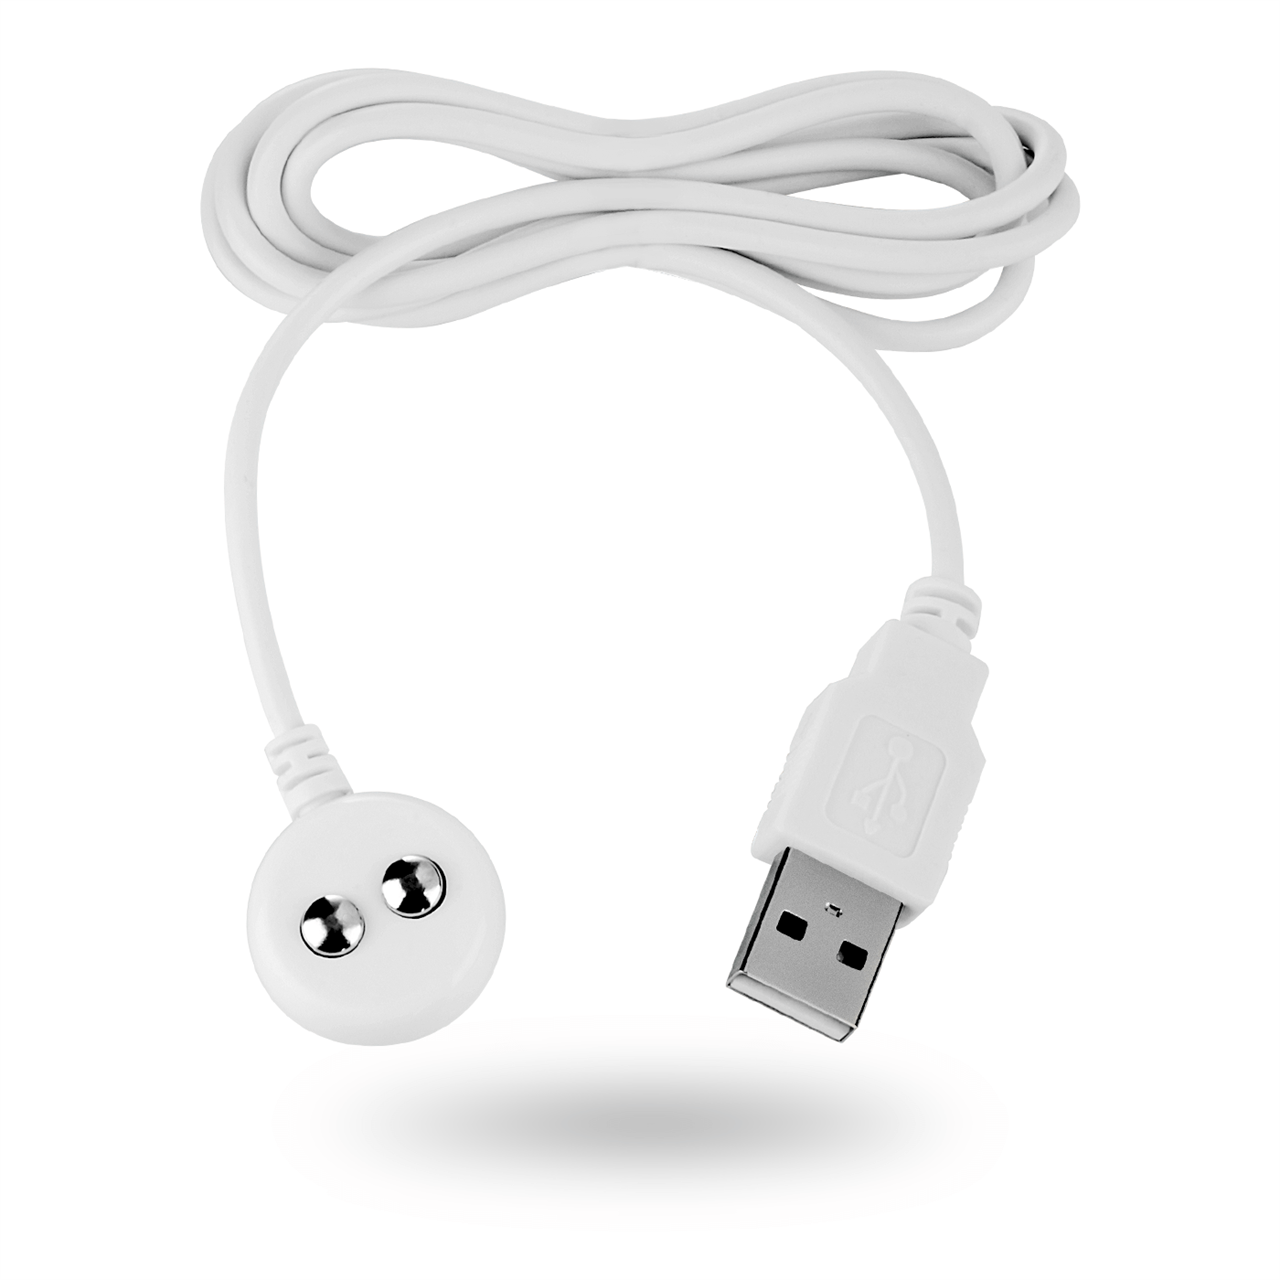 Satisfyer USB Charging Cable - UABDSM